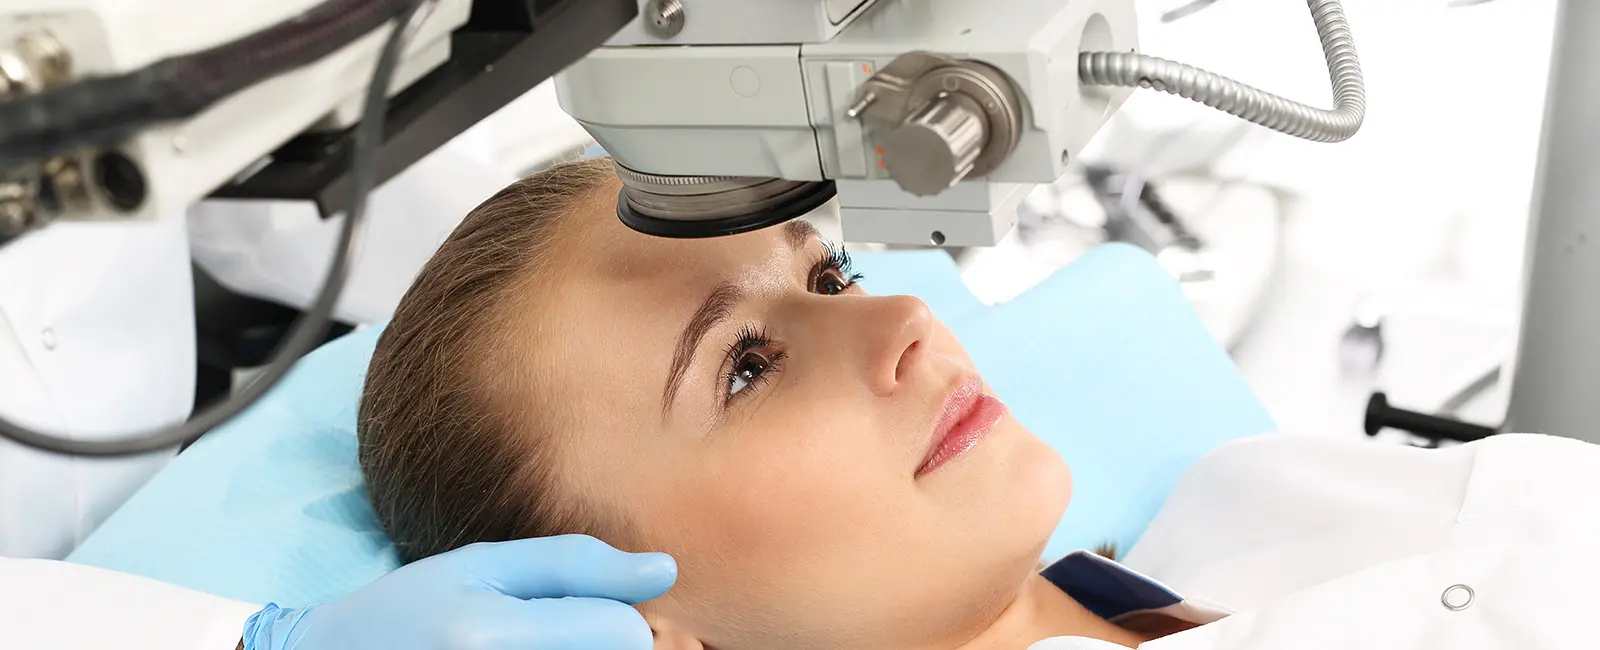 Glaucoma & Cataract Surgery: The iStent Procedure